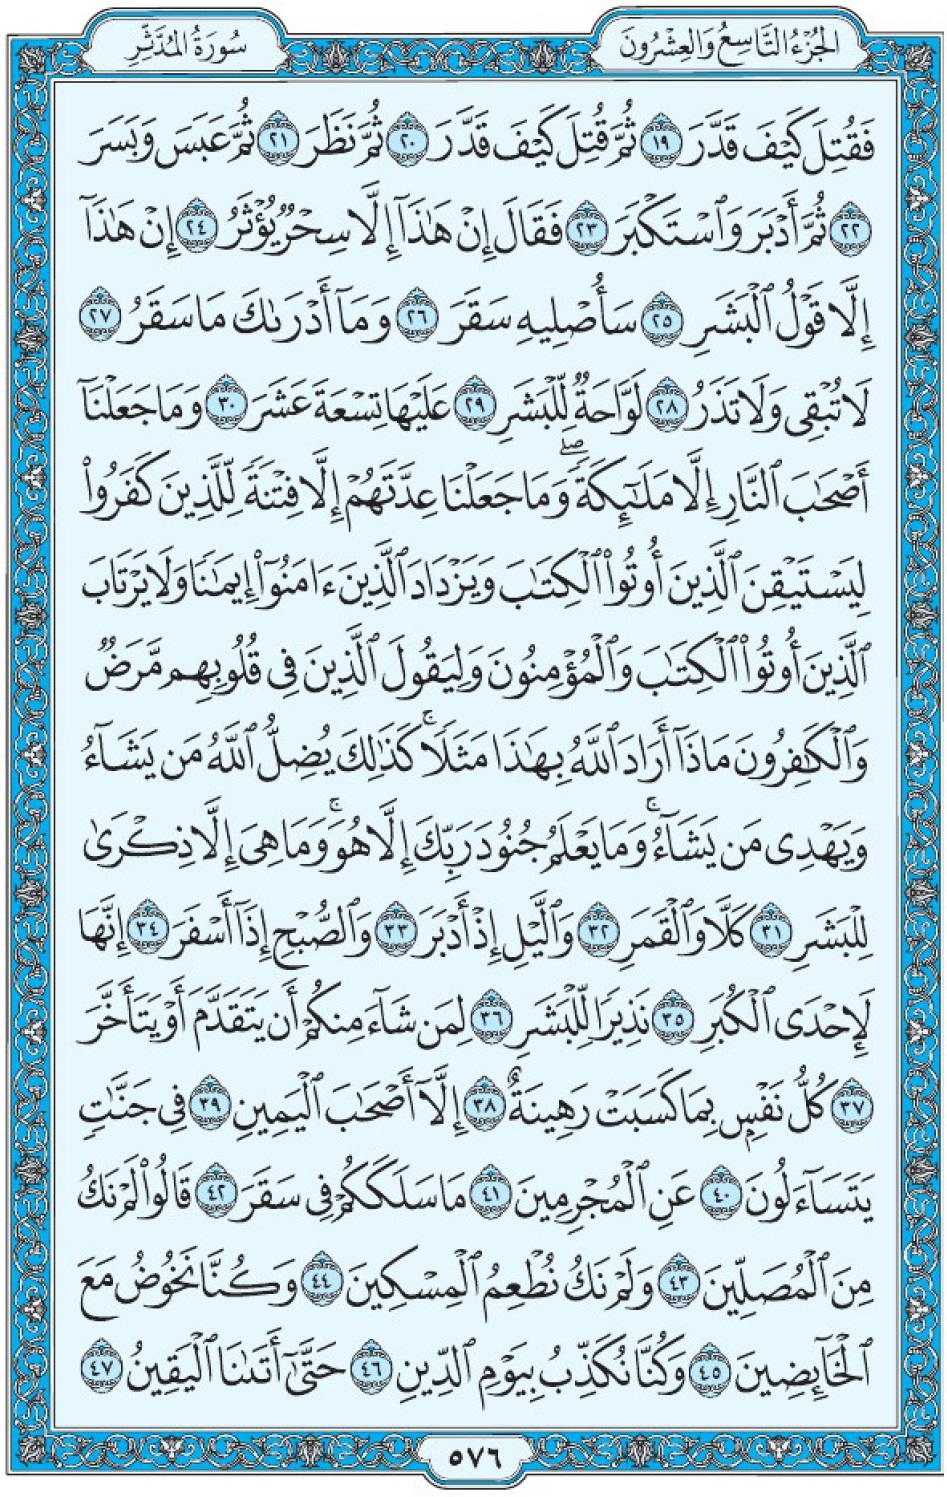 Коран Мединский мусхаф страница 576, аль-Мудассир, аят 19-47